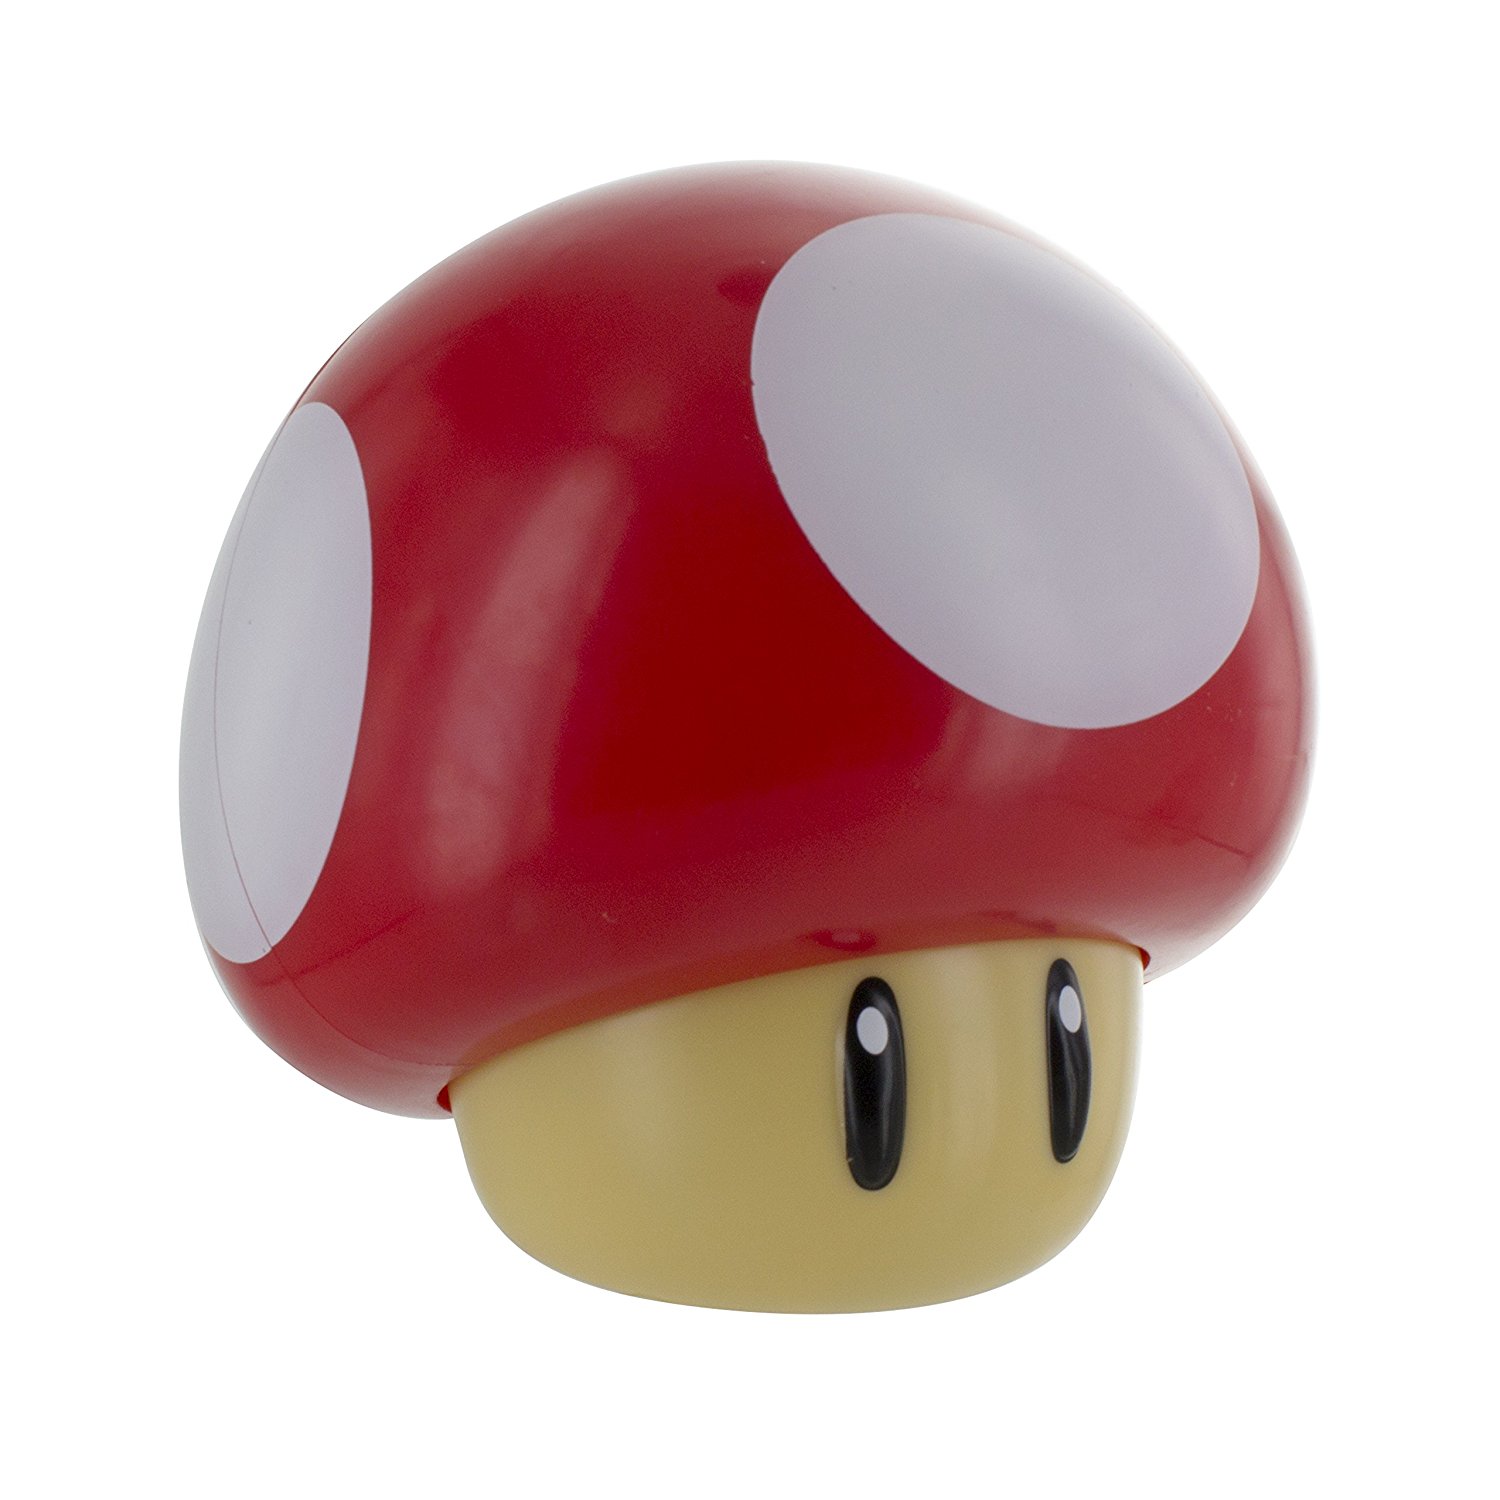 mario mushroom toy